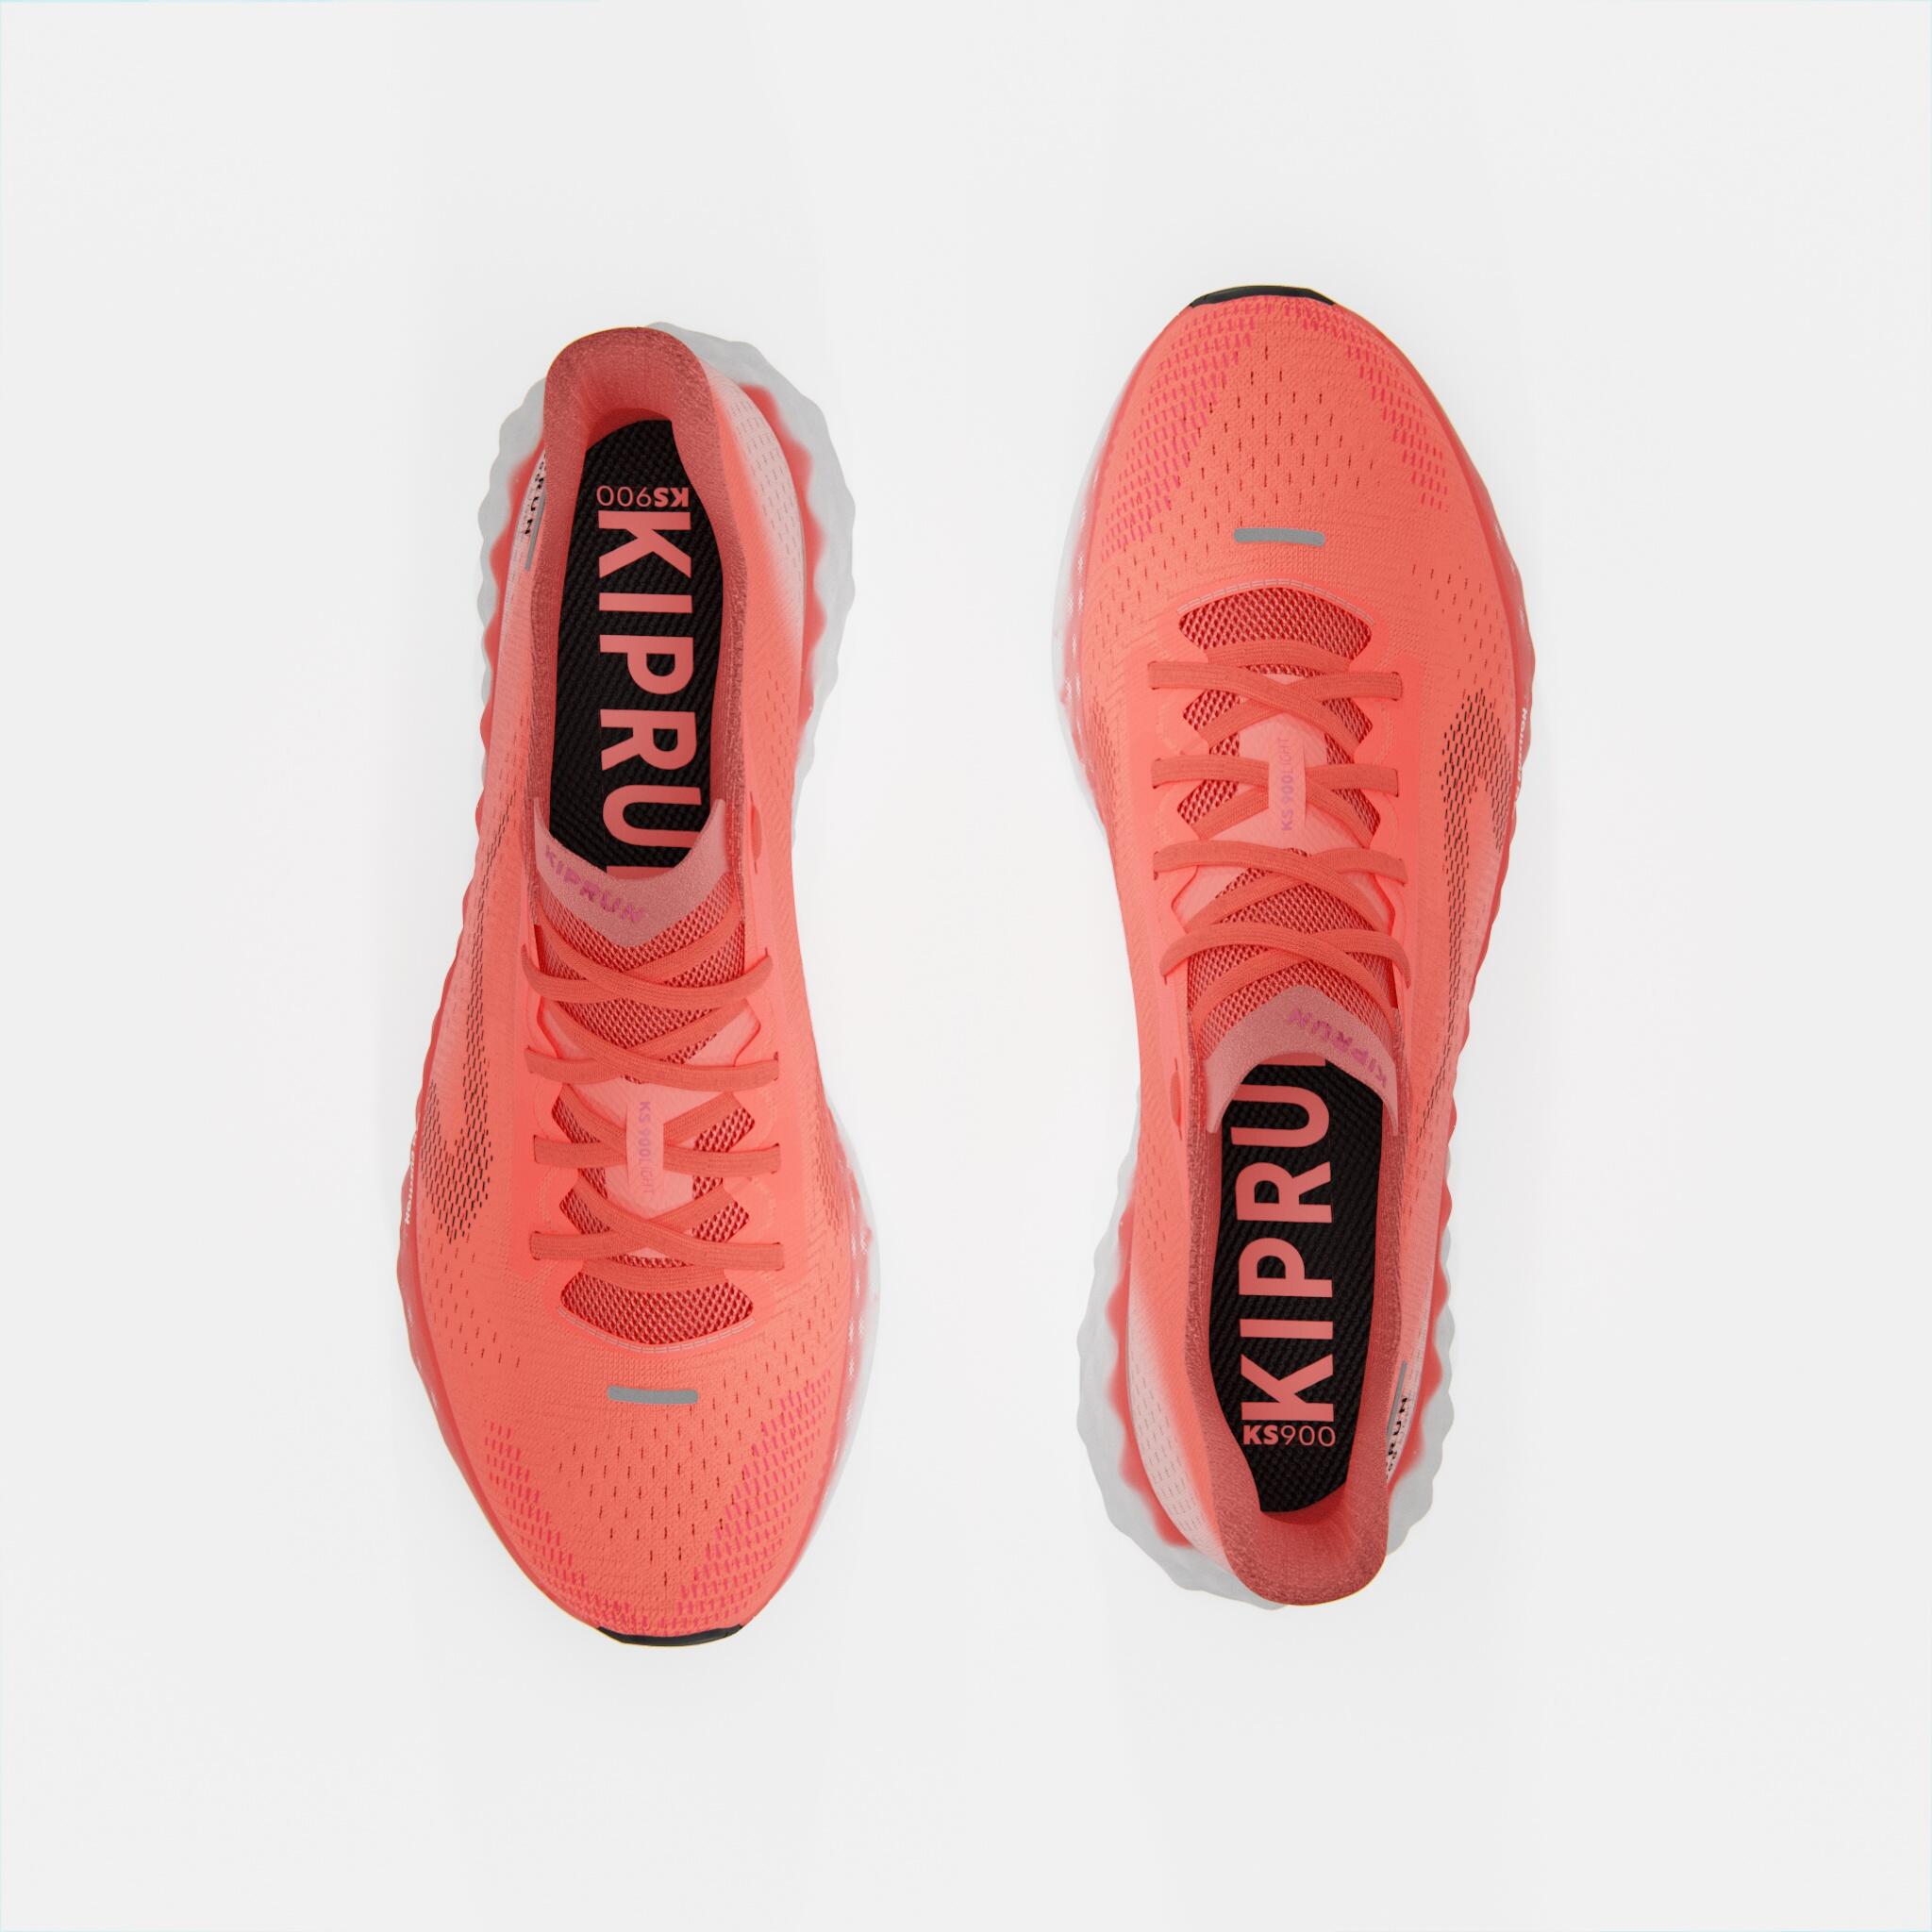  KIPRUN KS900 Women's Running Shoes - Light coral 7/12